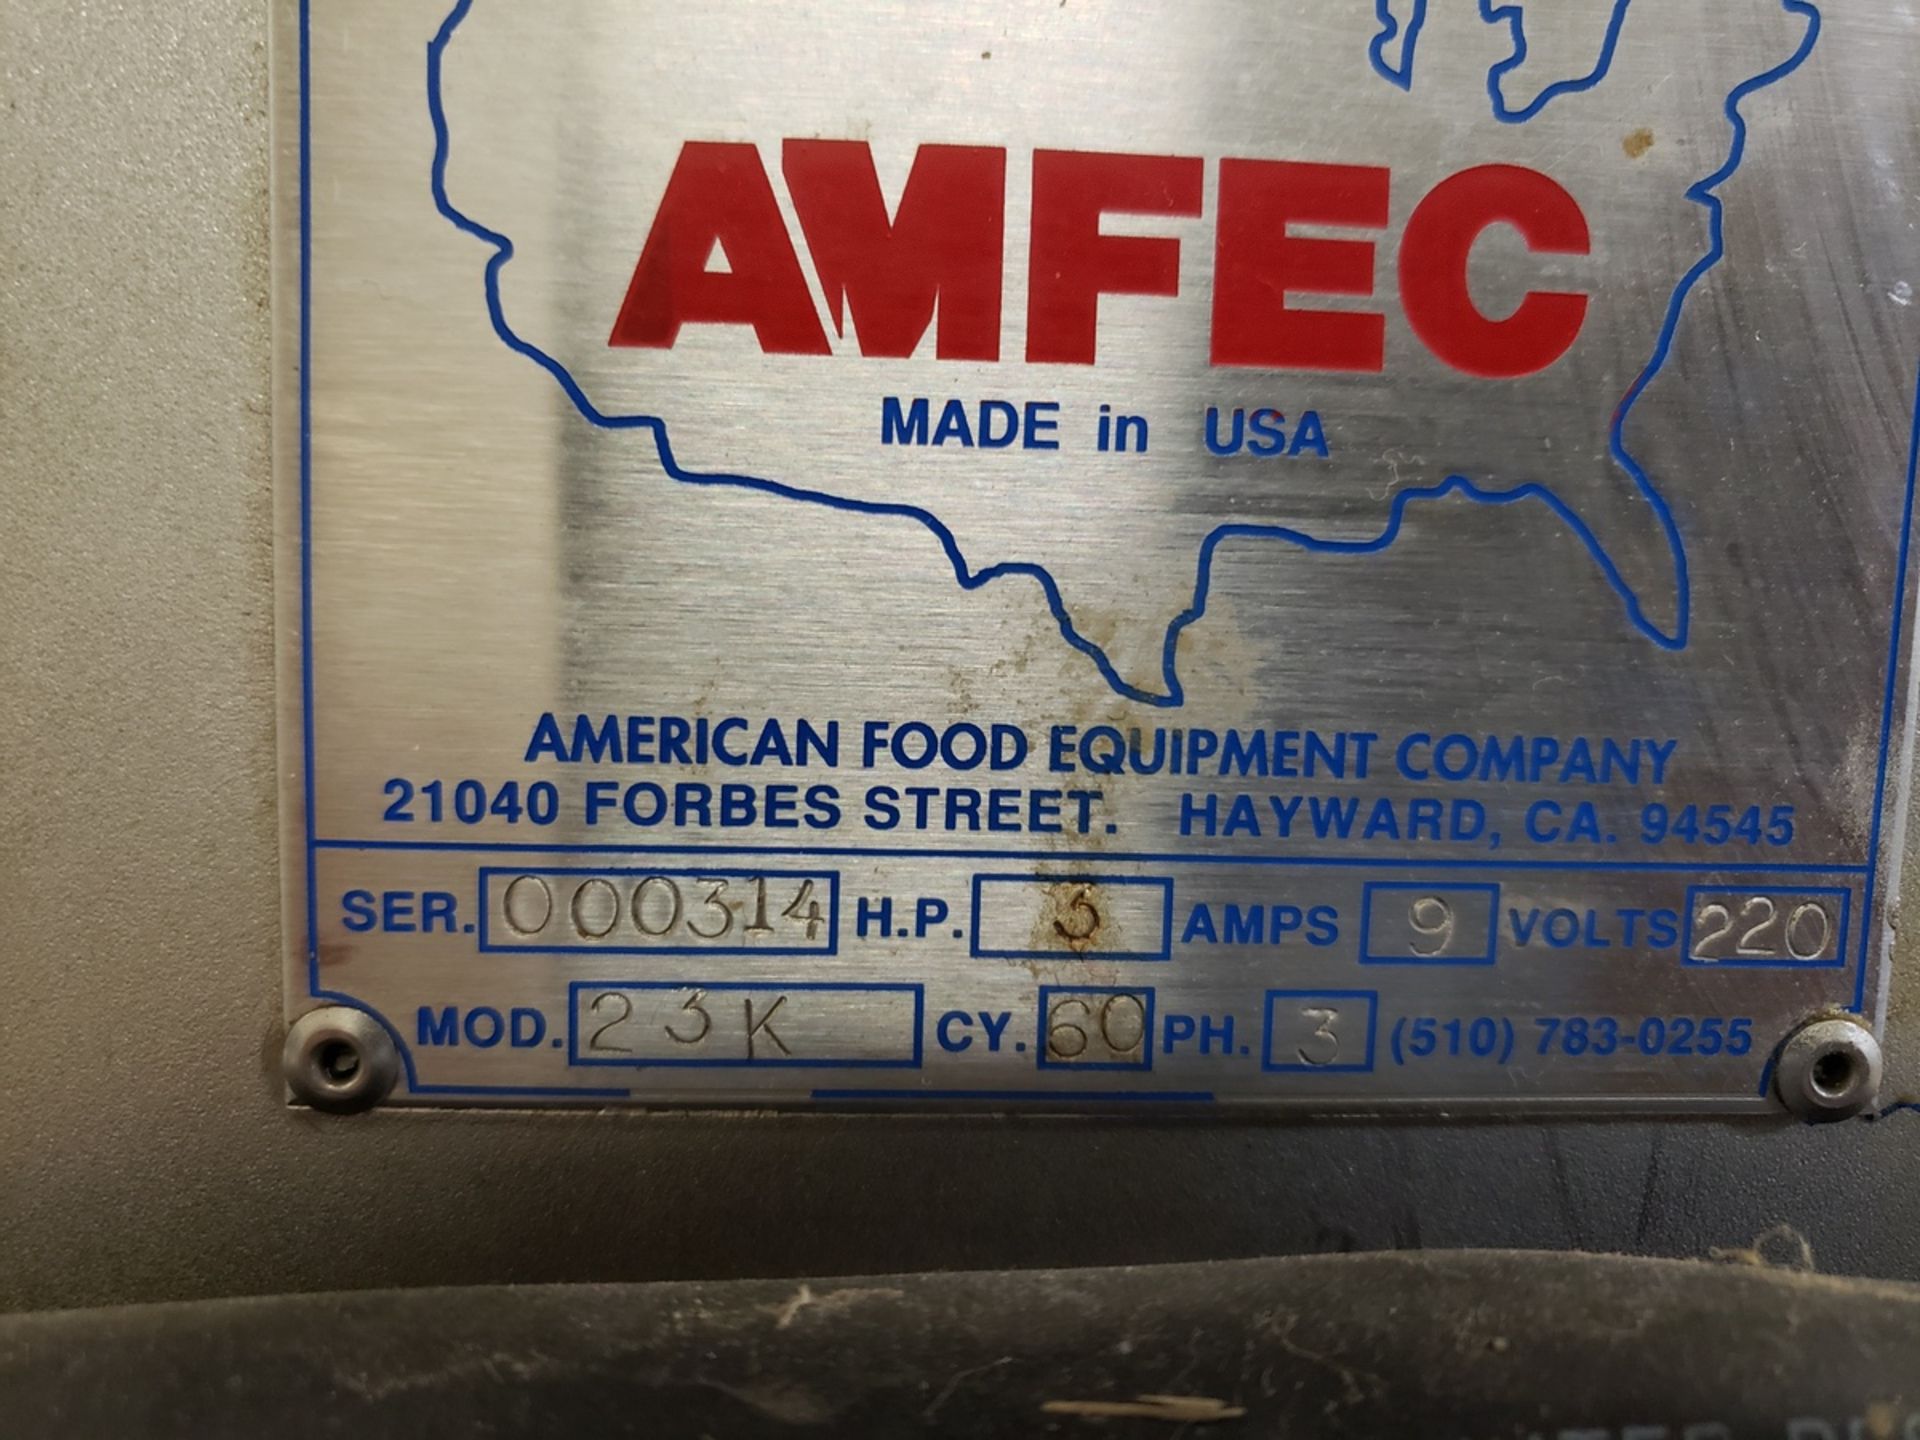 AMFEC Trough Lift & Dump, M# 23K, S/N 000314, W/ Stainless Steel Roll-In Dough Trou | Rig Fee: $450 - Image 2 of 3